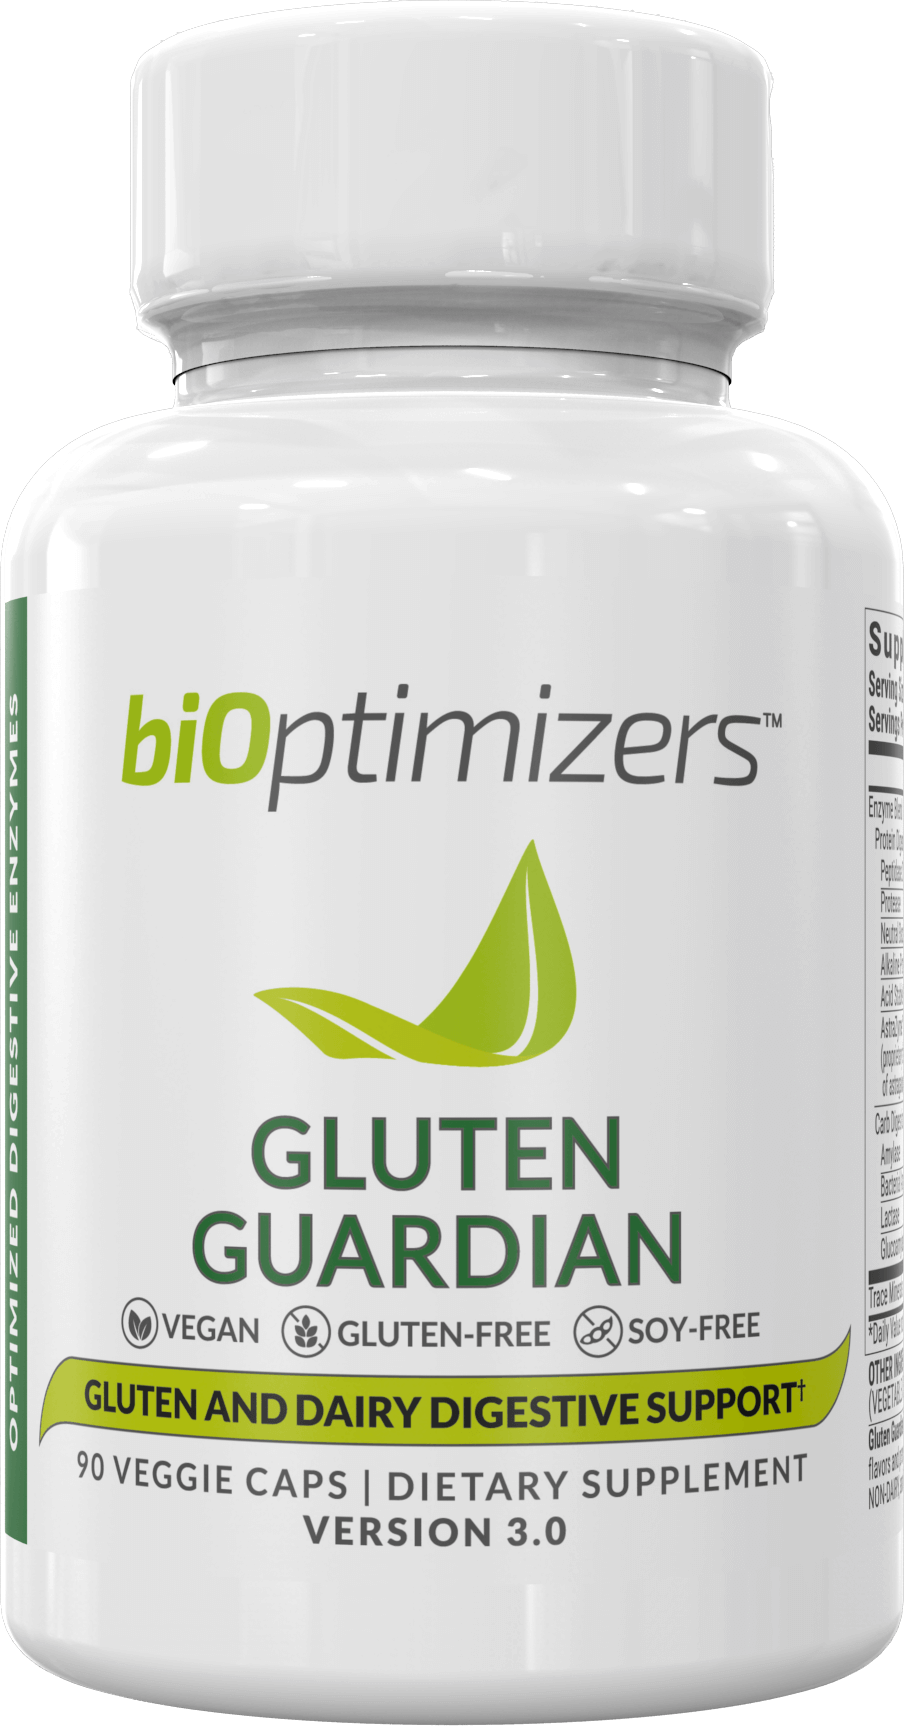 gluten-guardian-90-caps-1-bottle-front